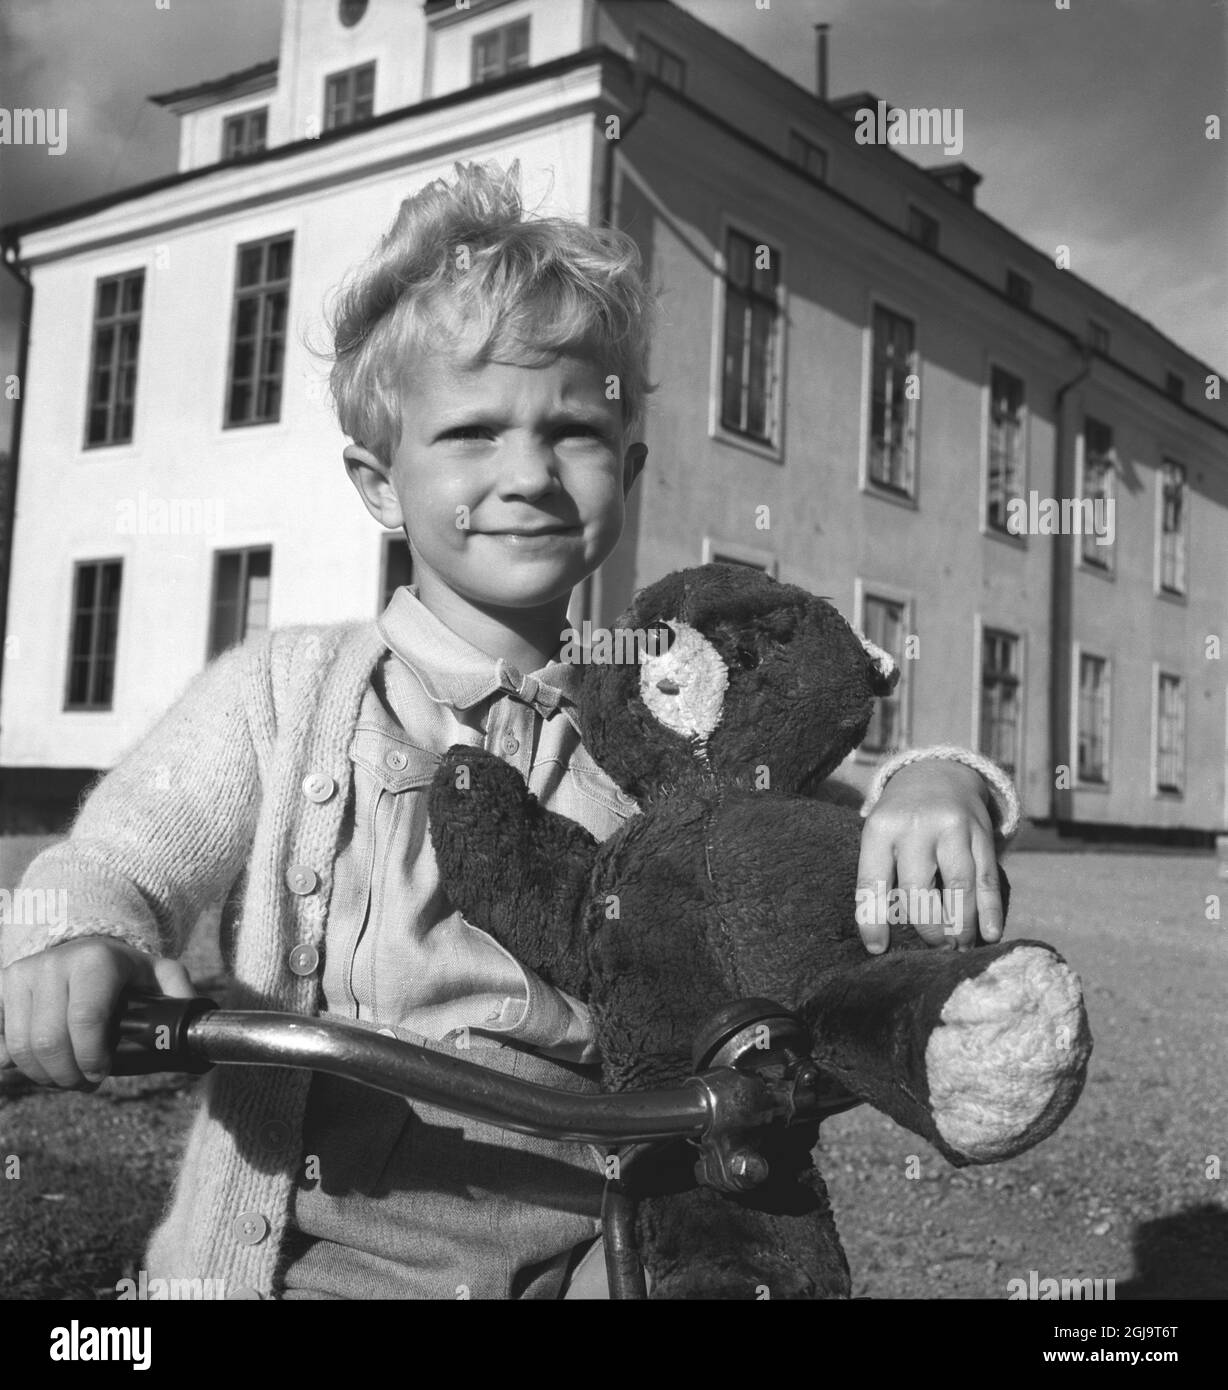 ARKIV 1950. Kronprins Carl Gustaf, 4 ar. Foto: Lennart Nilsson / SCANPIX / Kod: 3054 il re svedese Carl XVI Gustaf festeggerà il suo settantesimo compleanno il 30 aprile 2016. Foto Stock